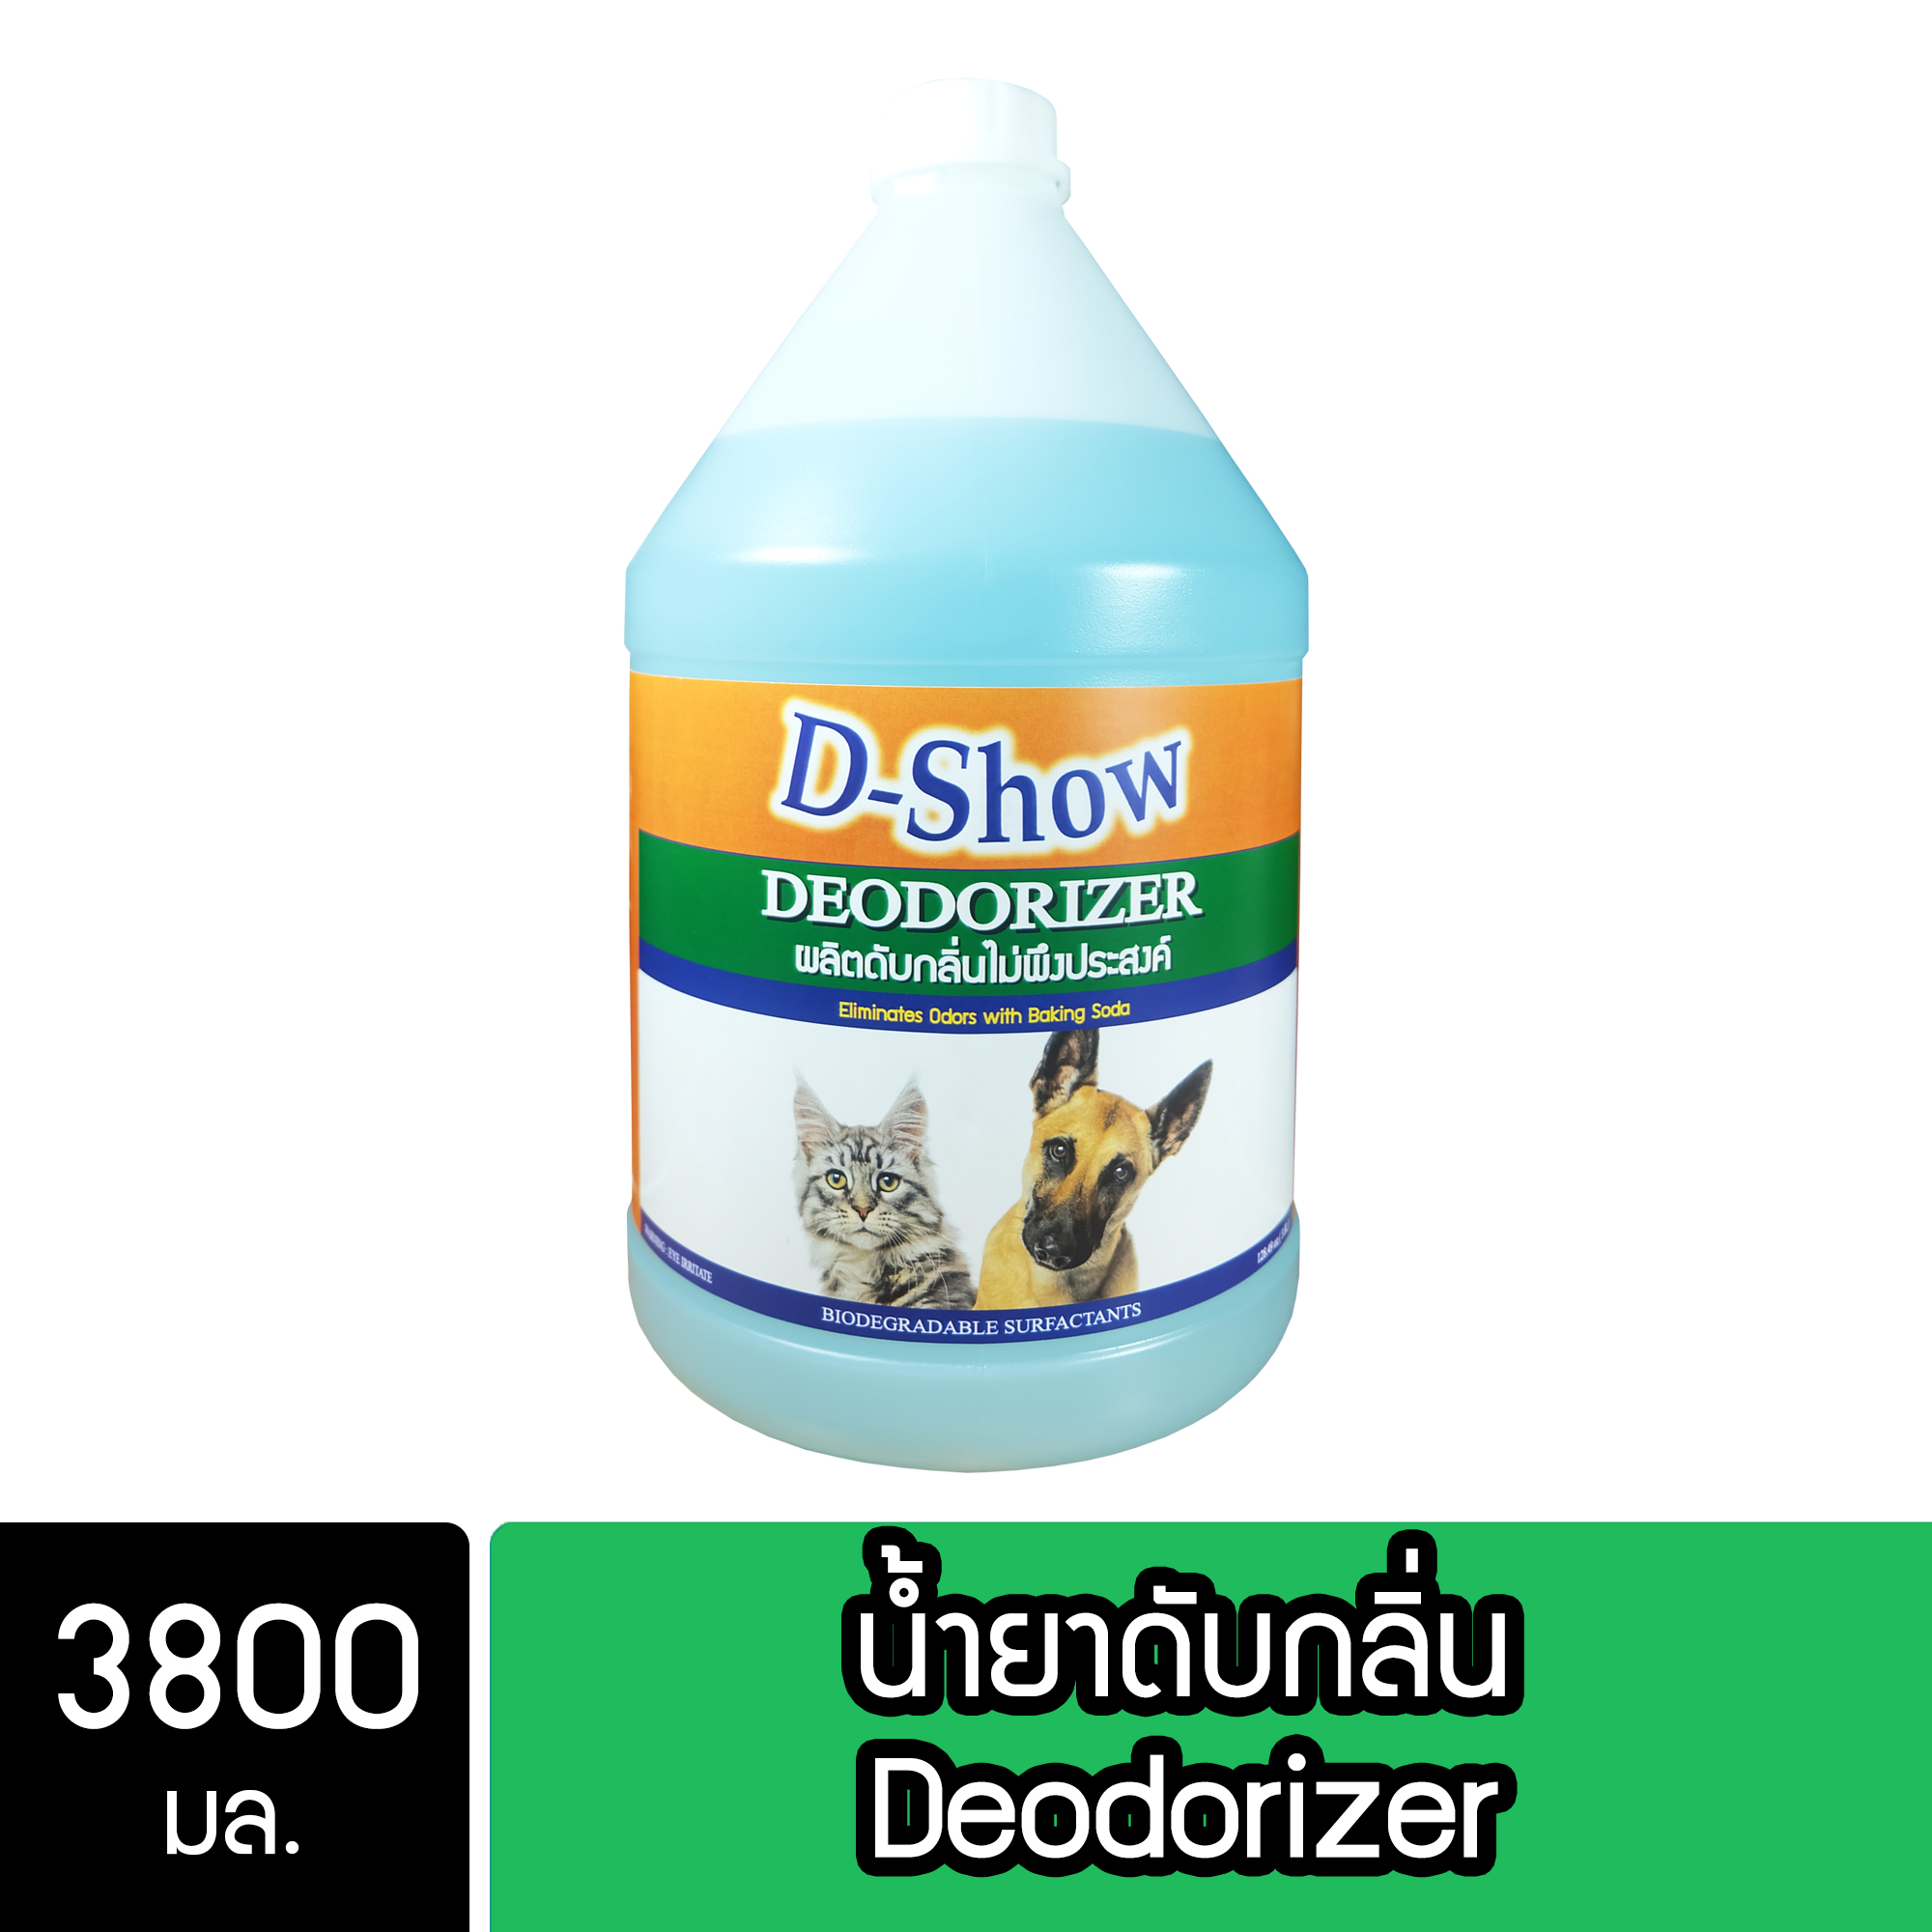 DShow น้ำยาดับกลิ่น ขนาด 3800มล. ดับกลิ่นฉี่หมาแมว กลิ่นเหม็น กลิ่นภายในรถยนต์ (Deodorizer)